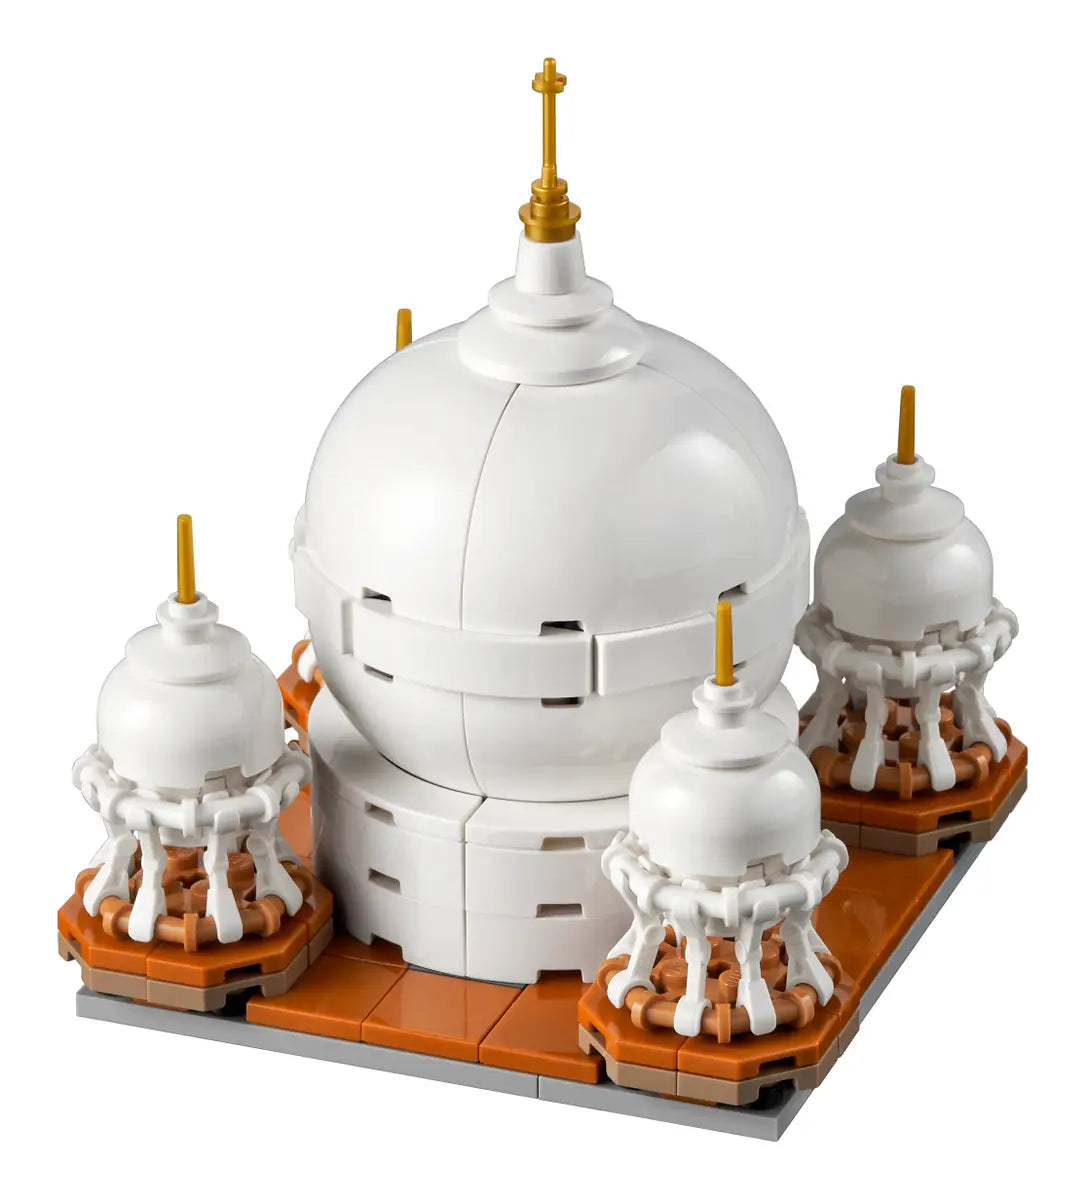 LEGO - Architecture - Taj Mahal - 21056